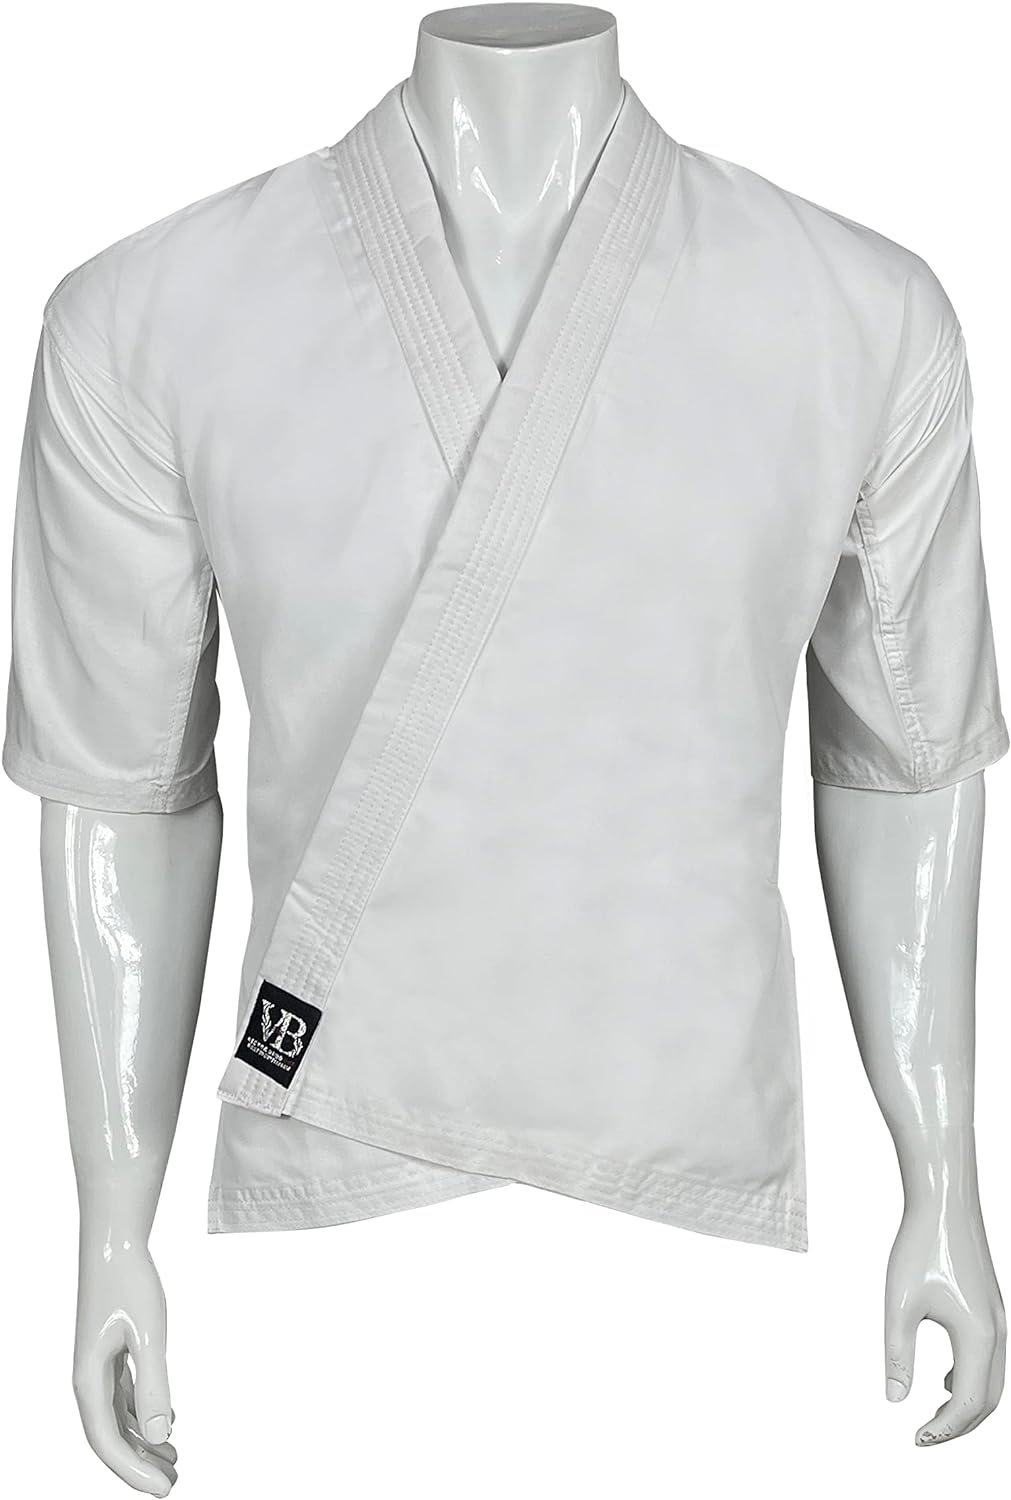 karate-uniform-gi-victor-budo-usa